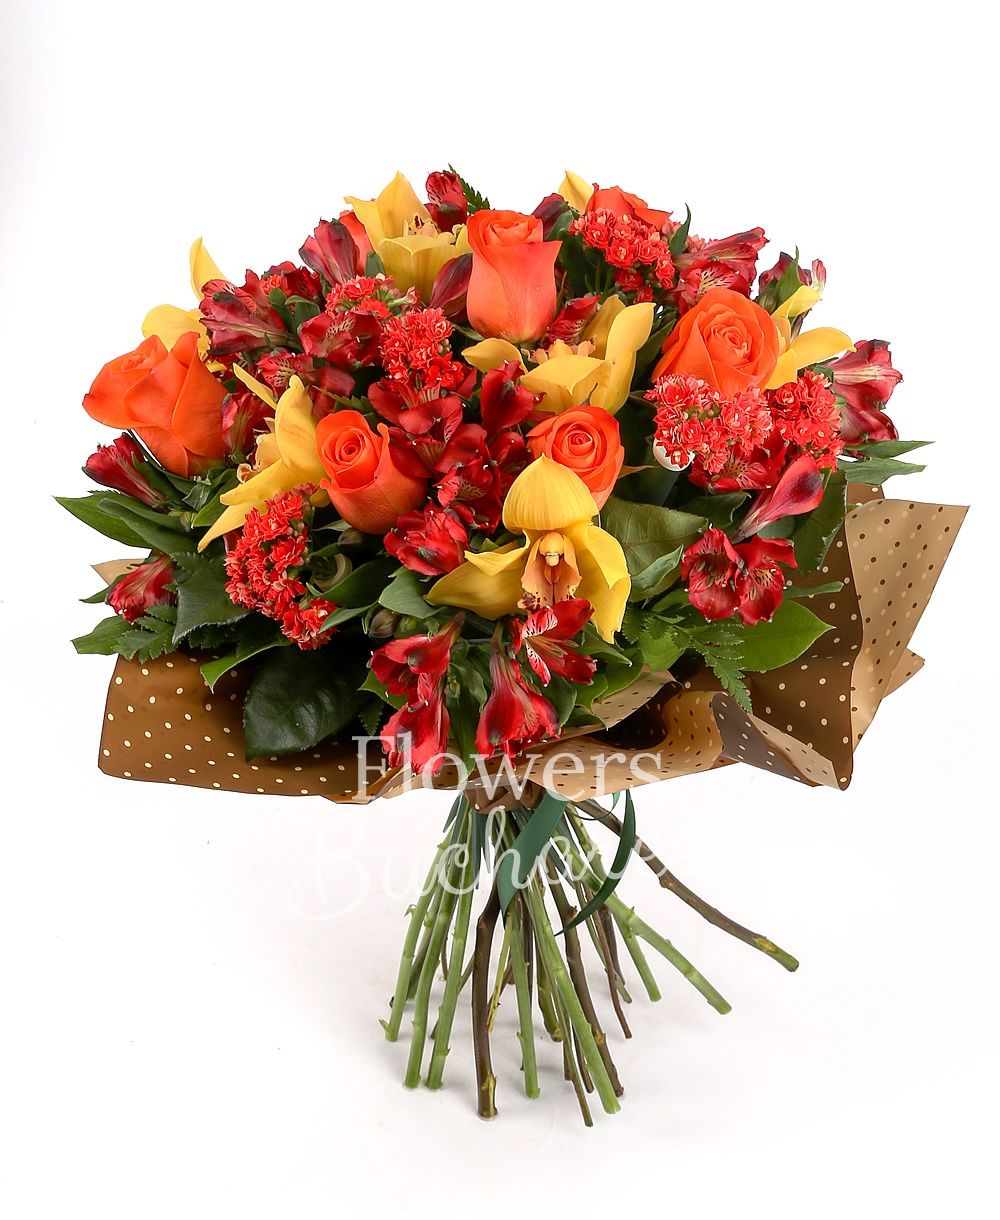 7 orange roses, 7 red alstroemeria, 7 red bouvardia, yellow cymbidium, greenery